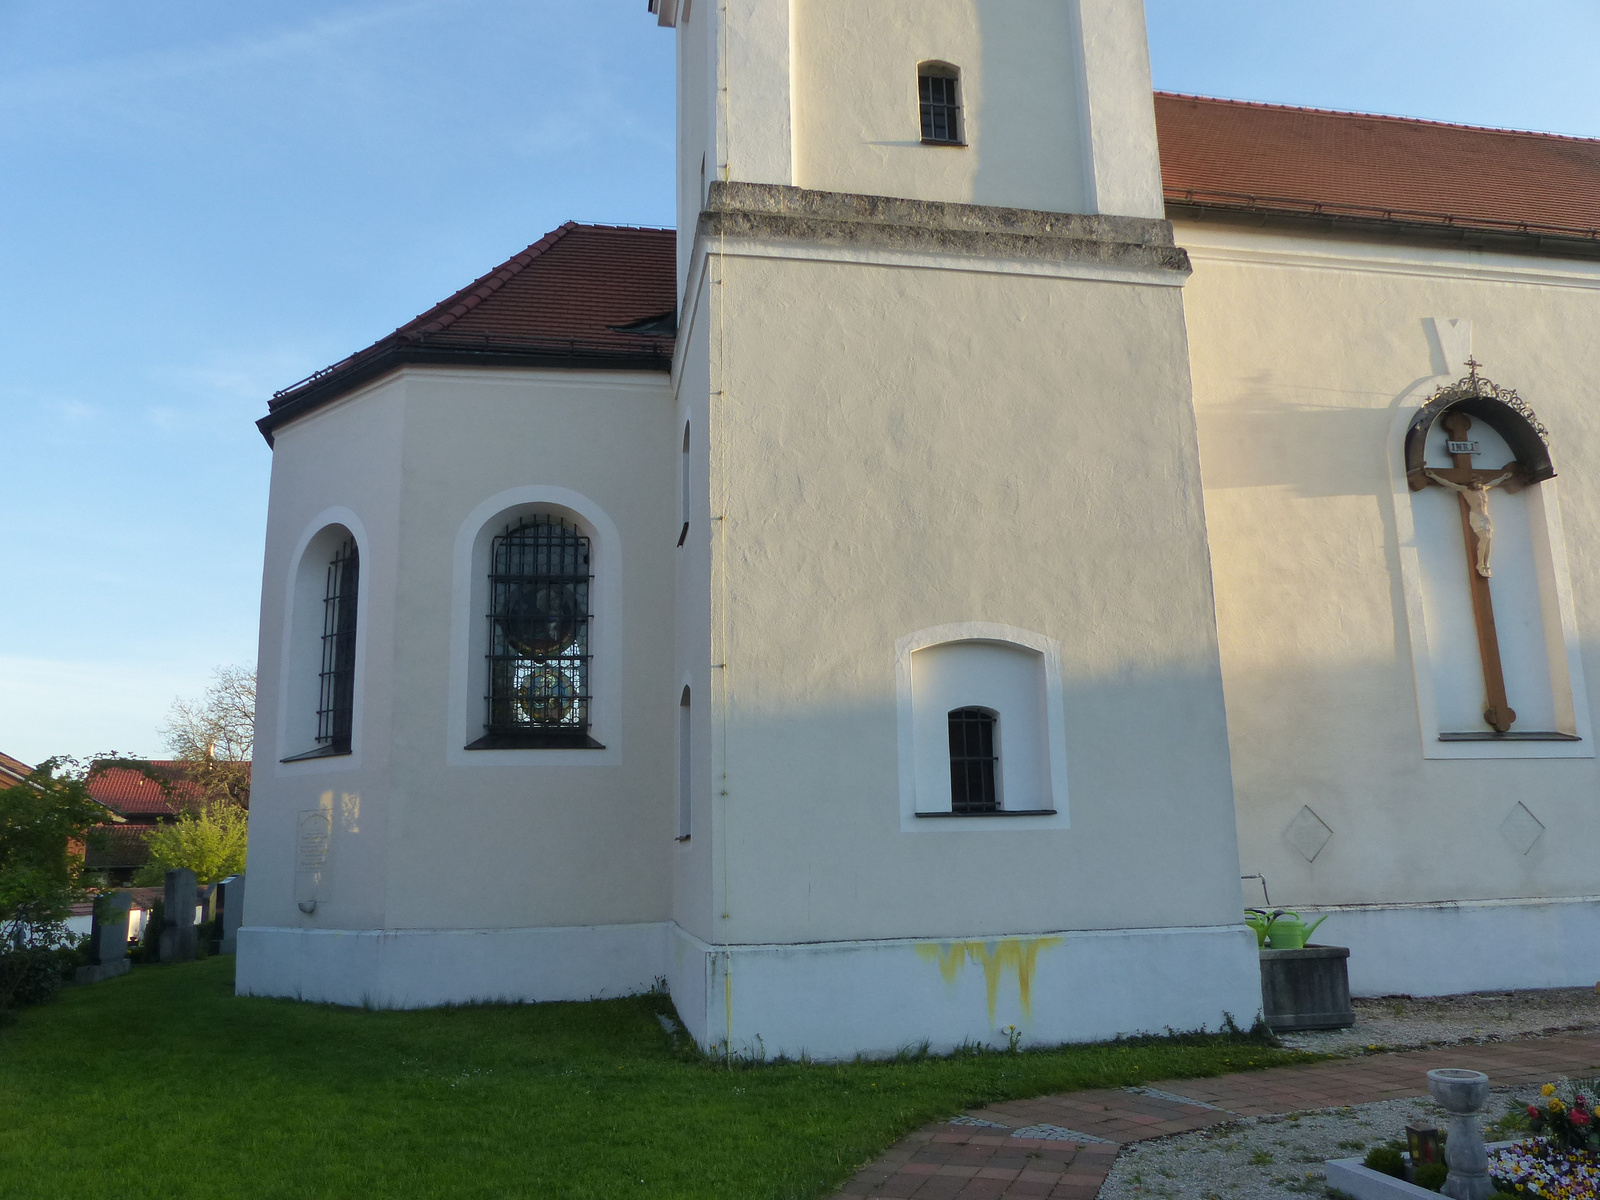 St. Valentin in Endlhausen, SzG3